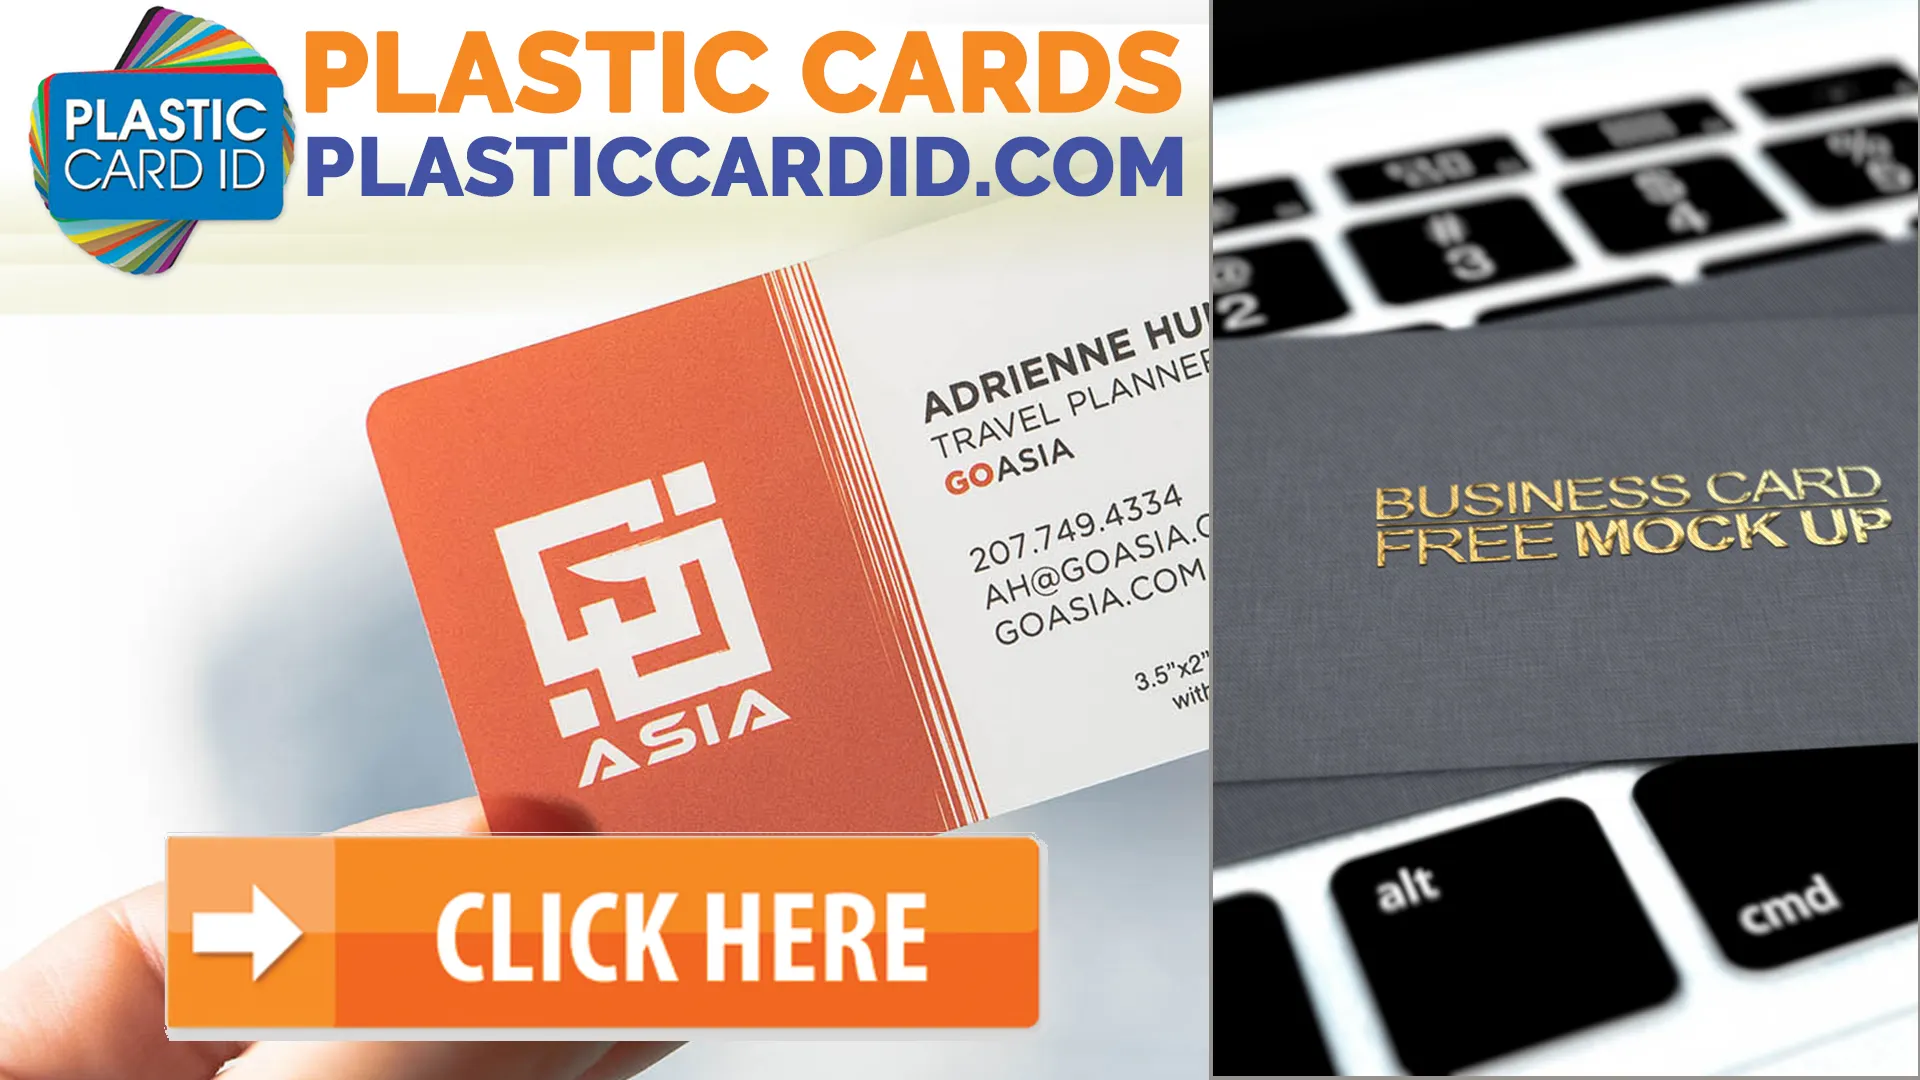 Alternatives Traditional Plastic Cards